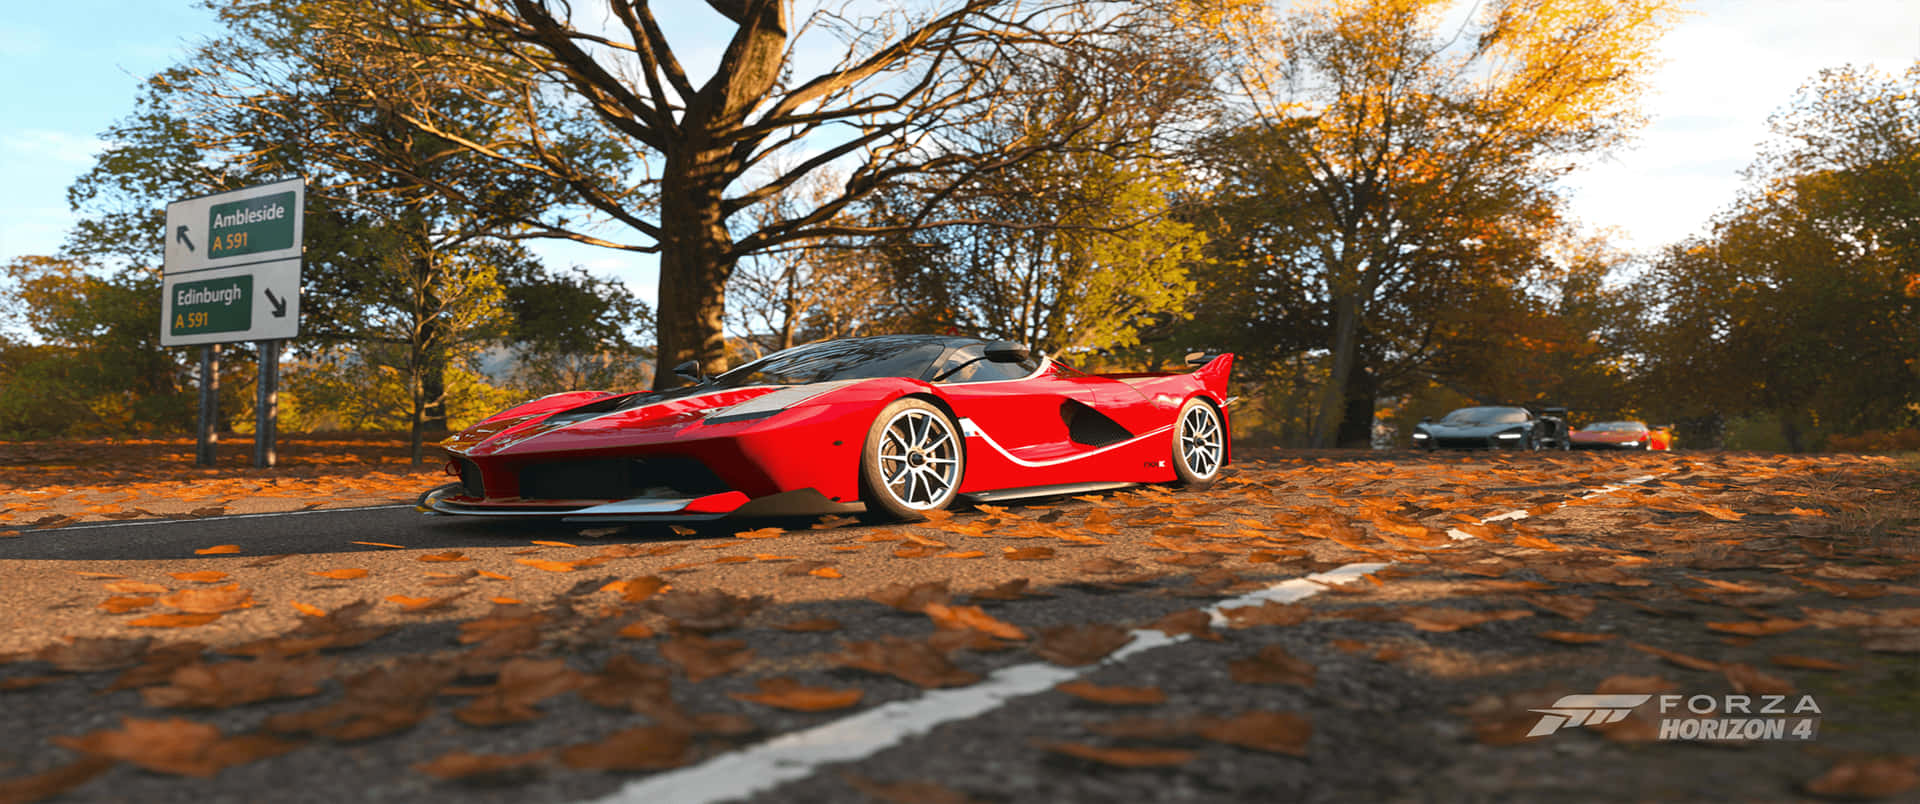 3440x1440pferrari Fxx K Forza Horizon 4 Bakgrundsbild.